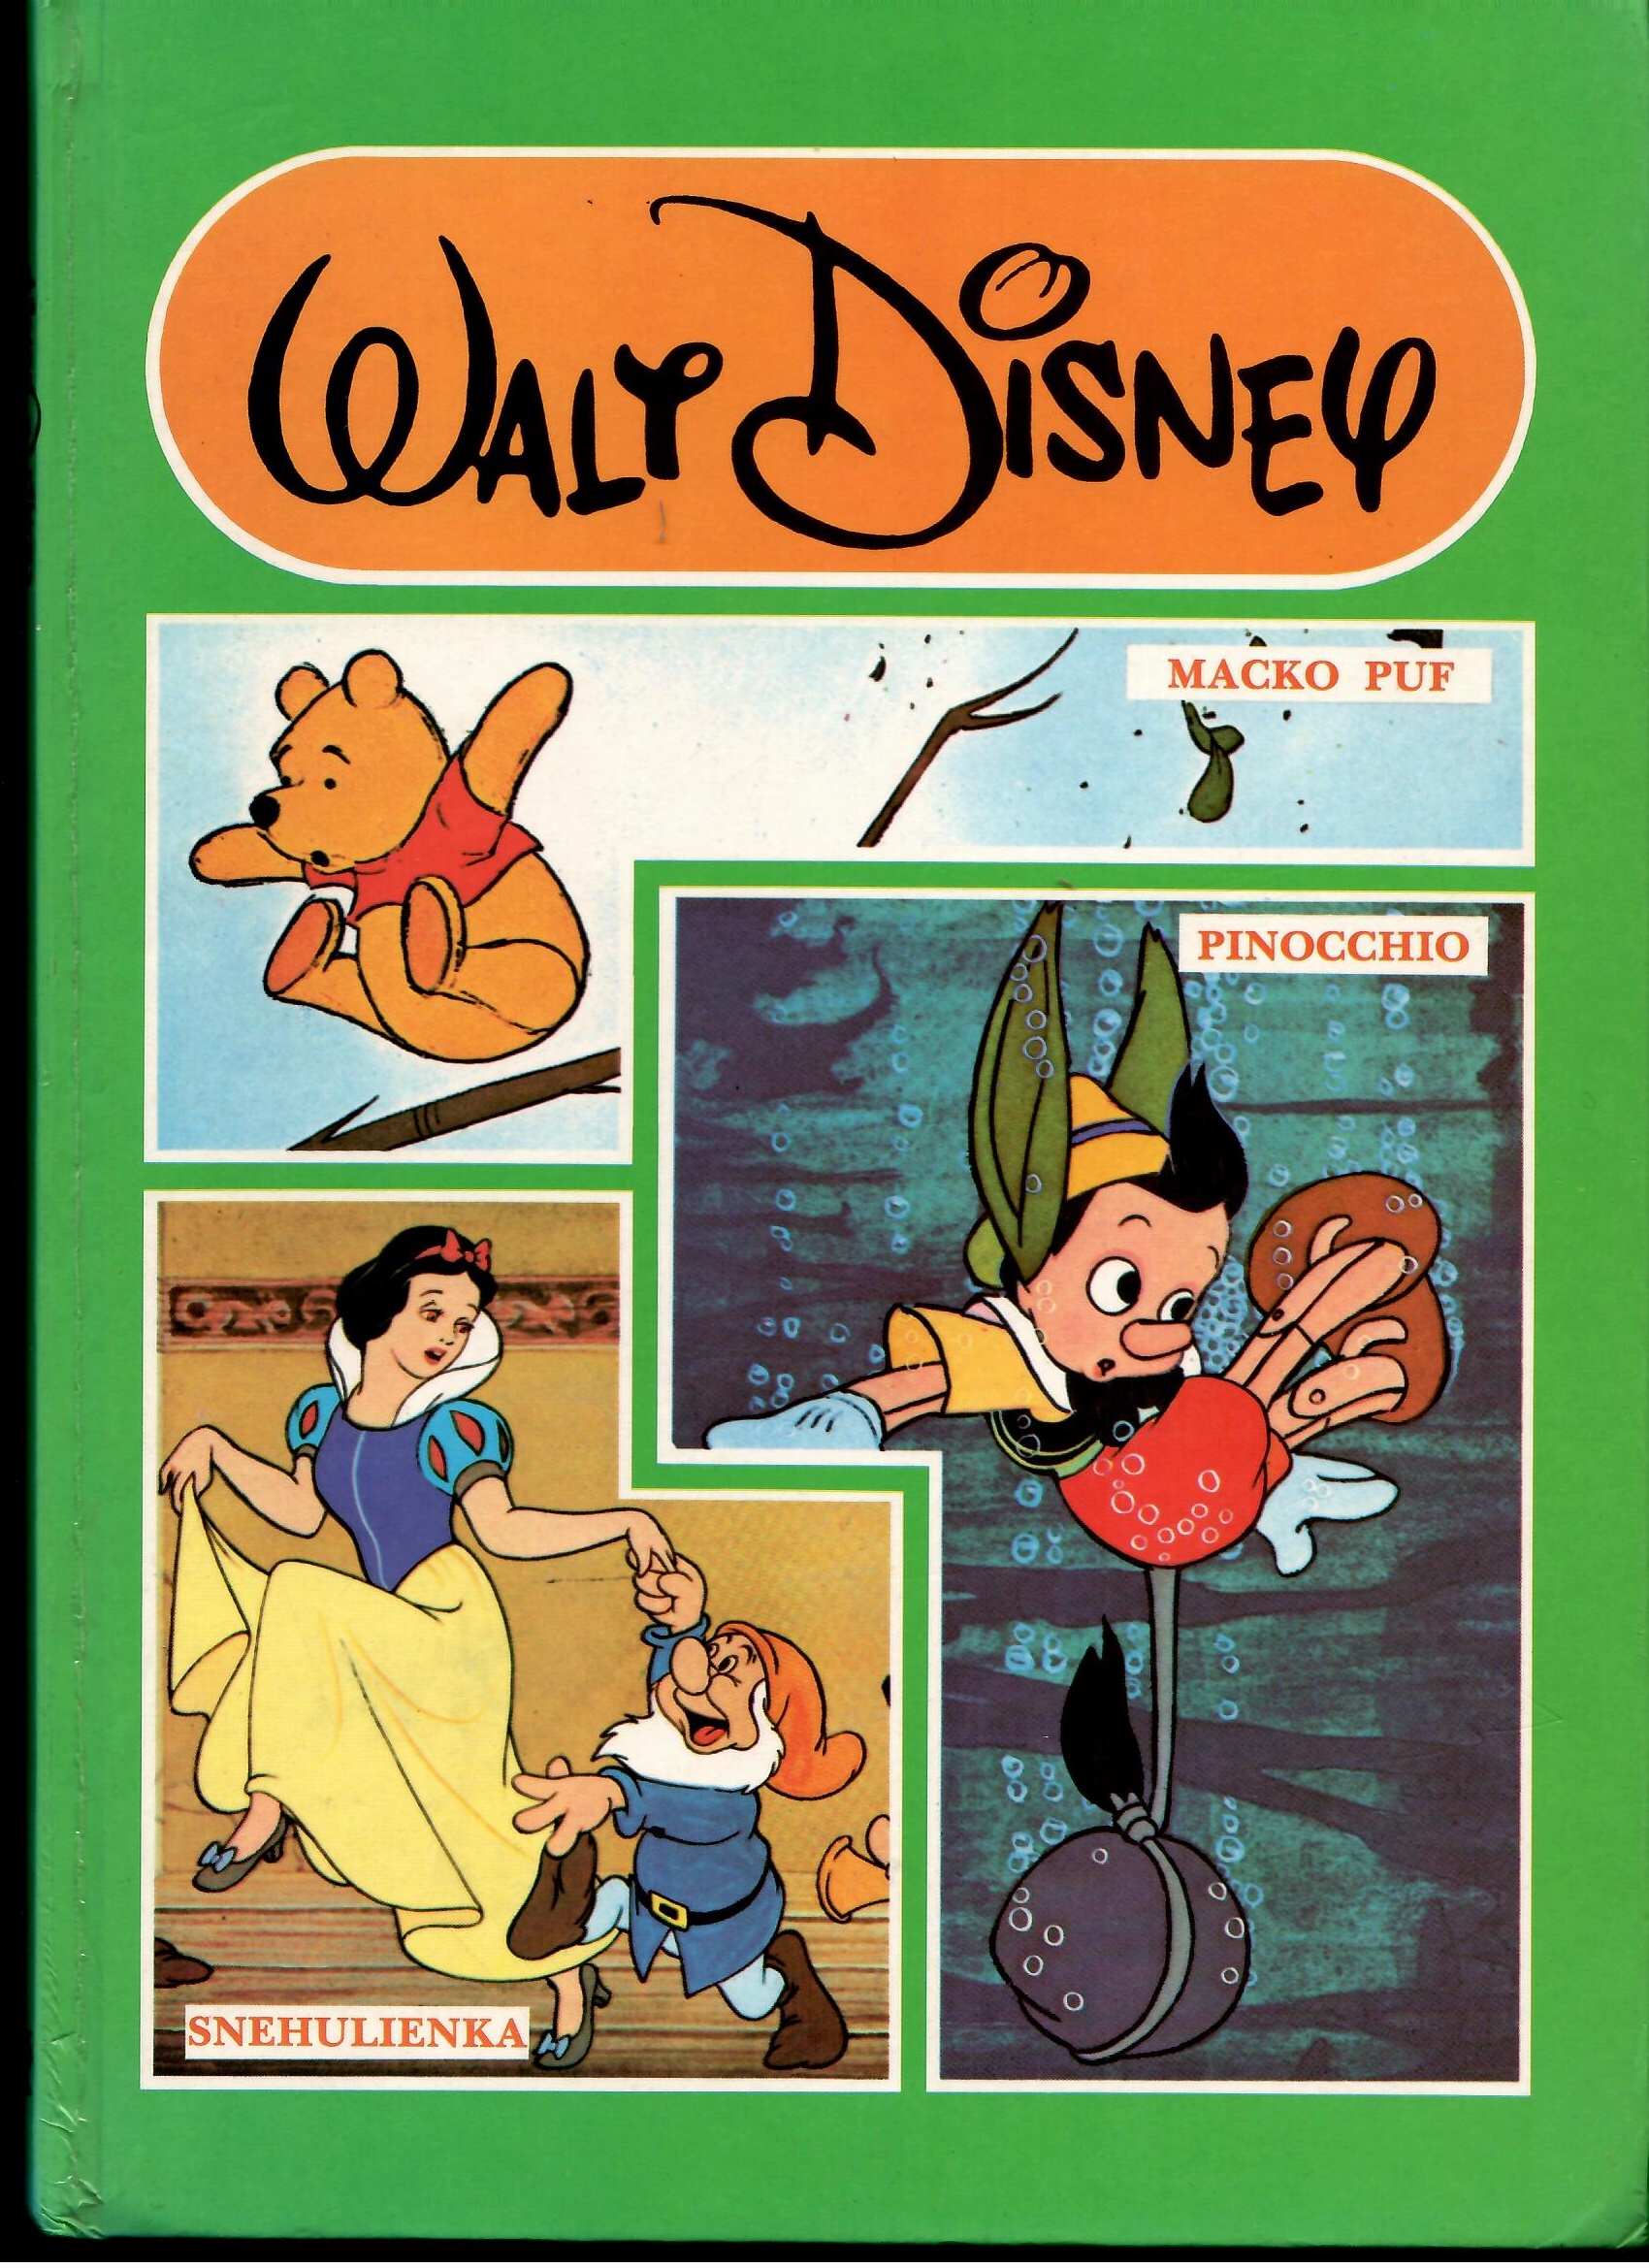 Macko Puf, Pinocchio, Snehulienka /Walt Disney/